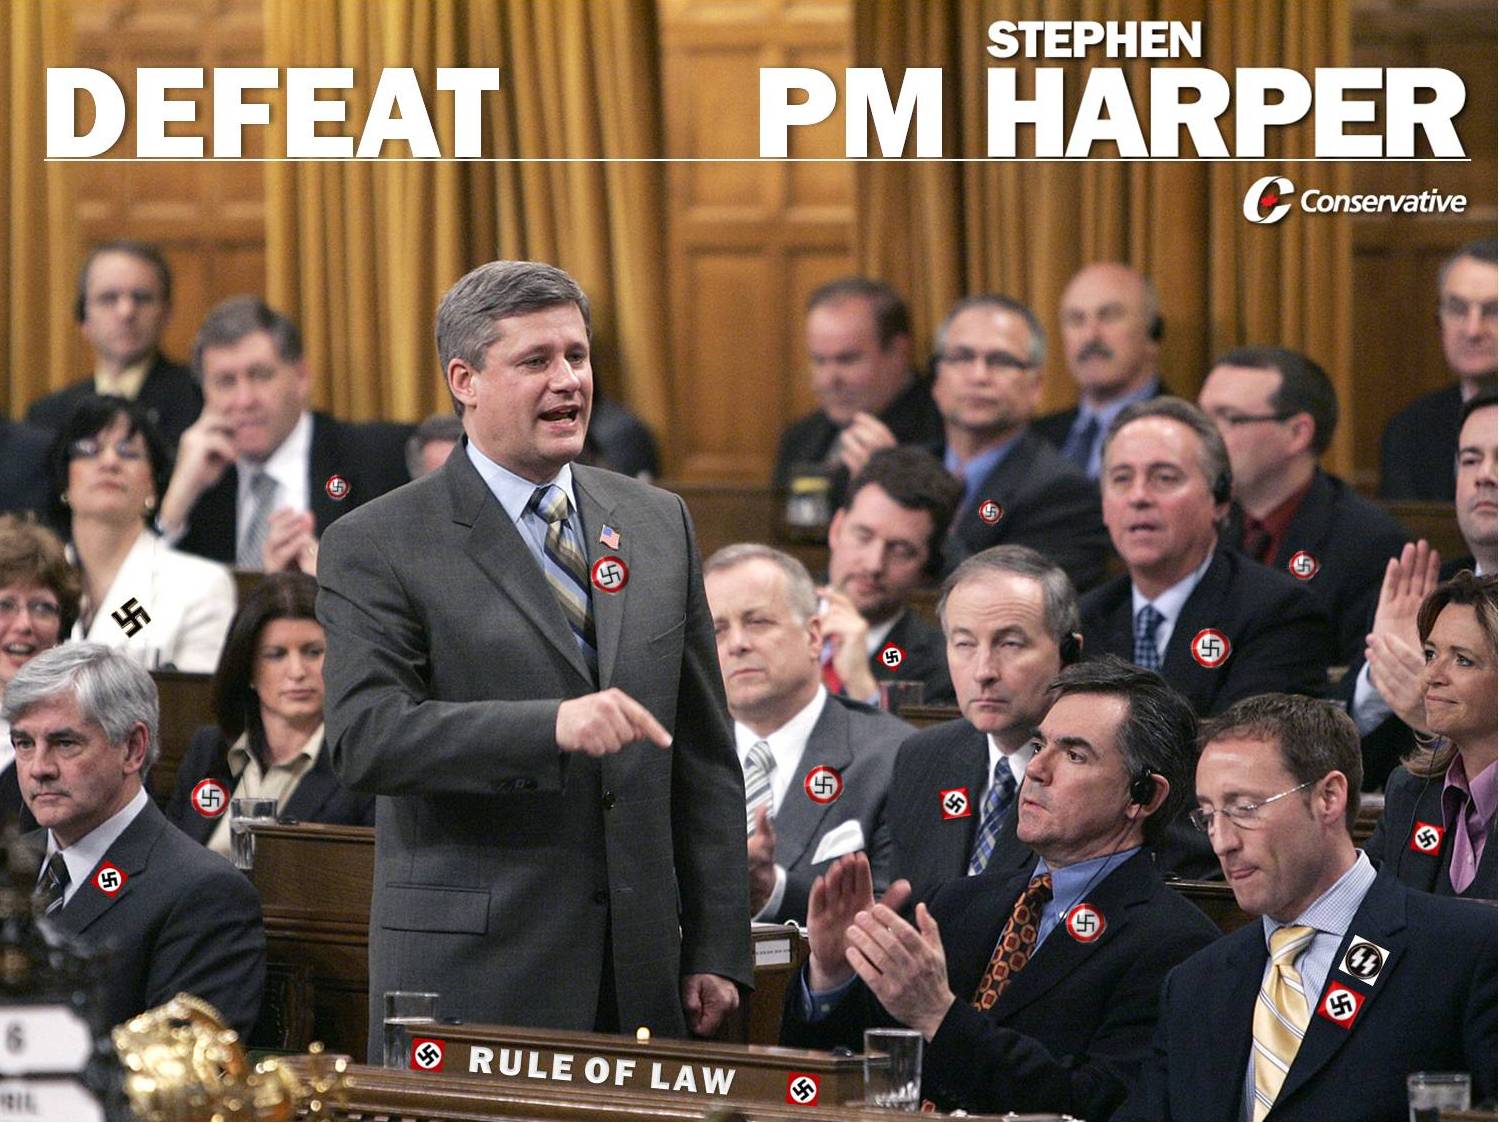 Defeat Harper!